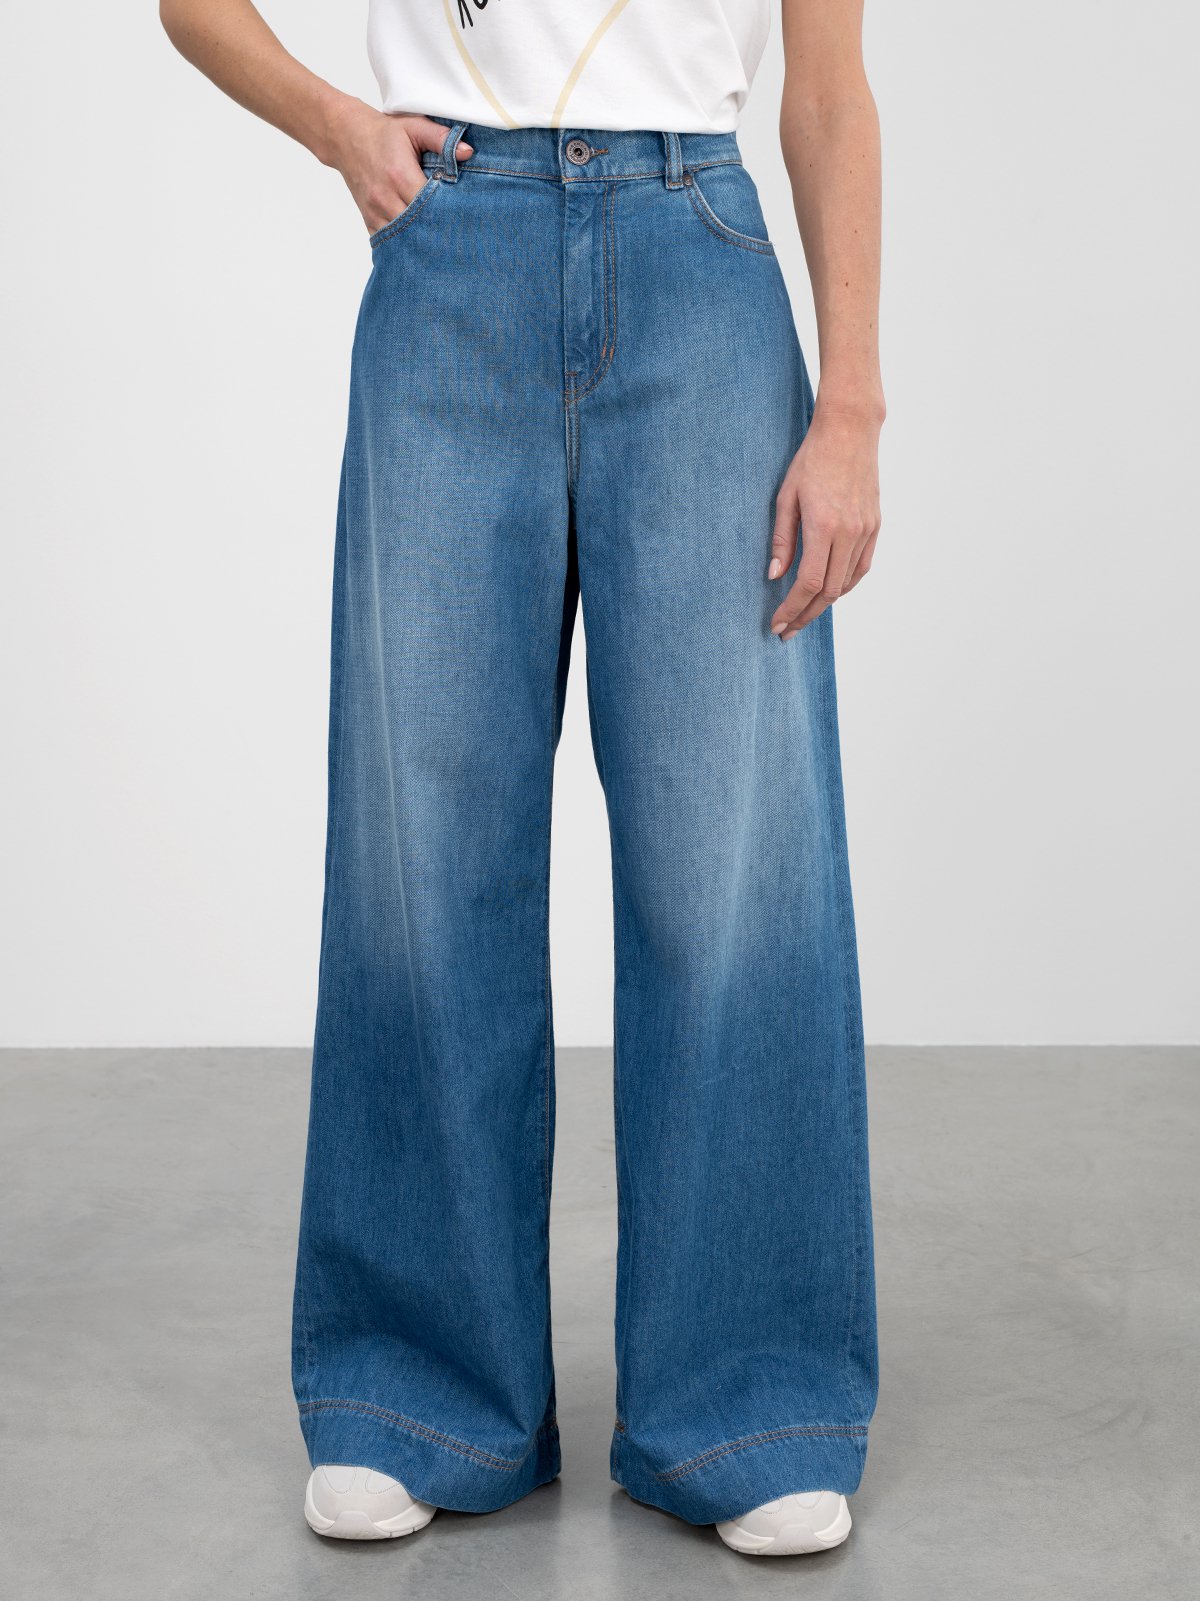 Max Mara Women's High Rise Slim Fit Casual Pants Dark Blue Size 8 - Shop  Linda's Stuff